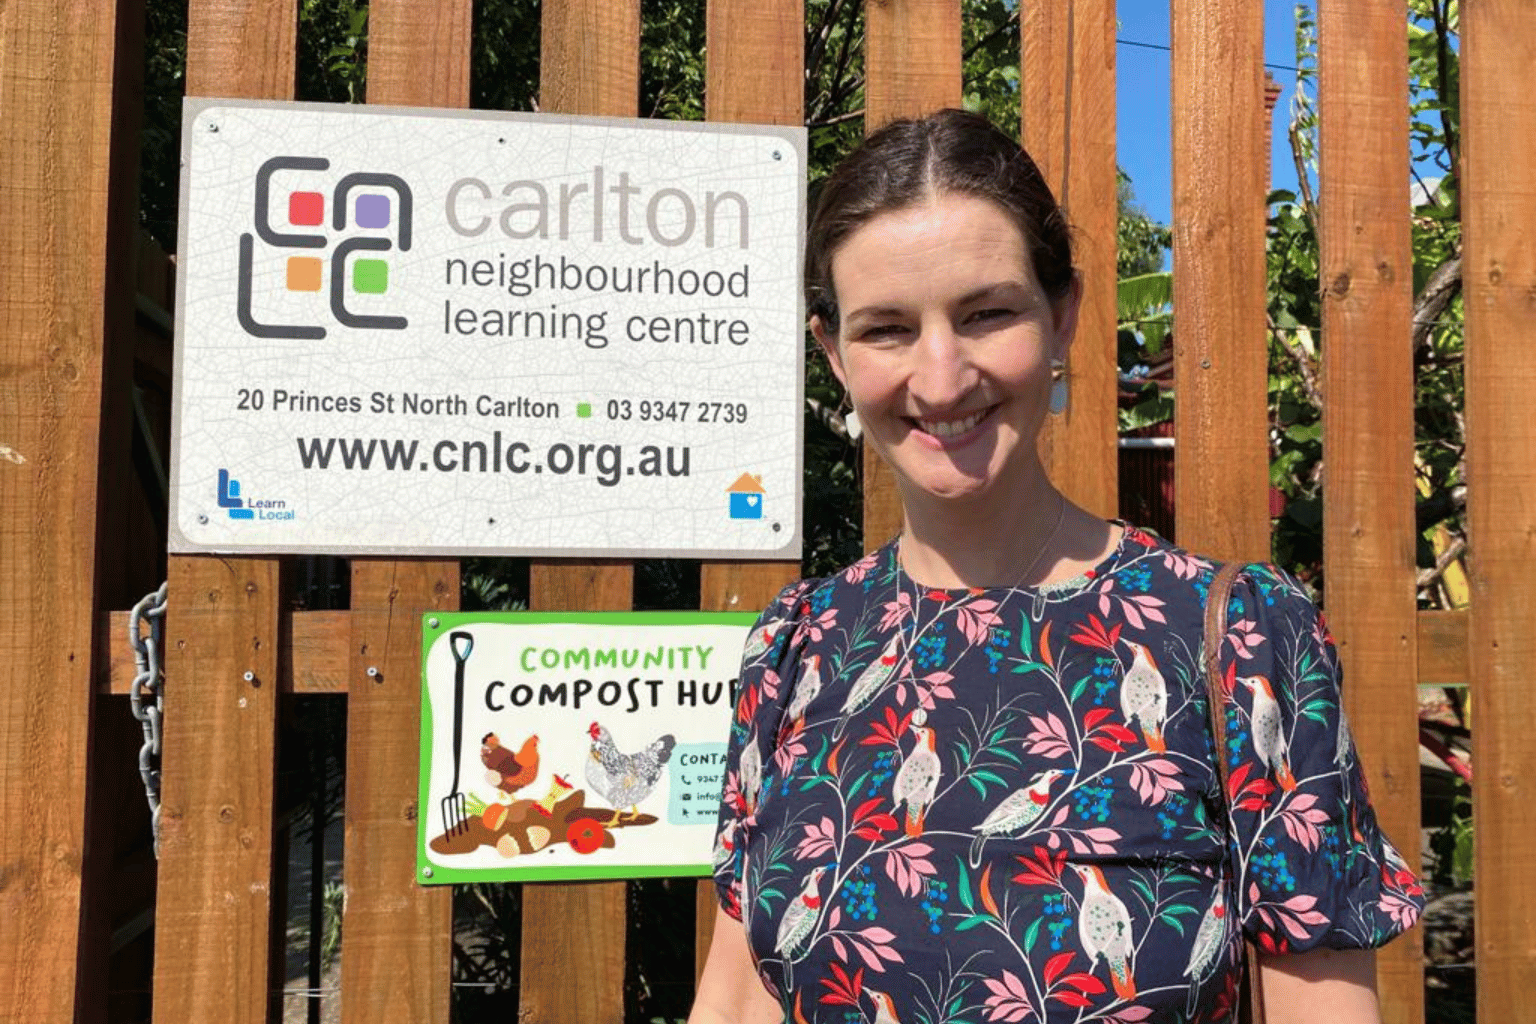 Ellen Sandell MP standing next to a sign for Carlton Neighbourhood Learning Centre